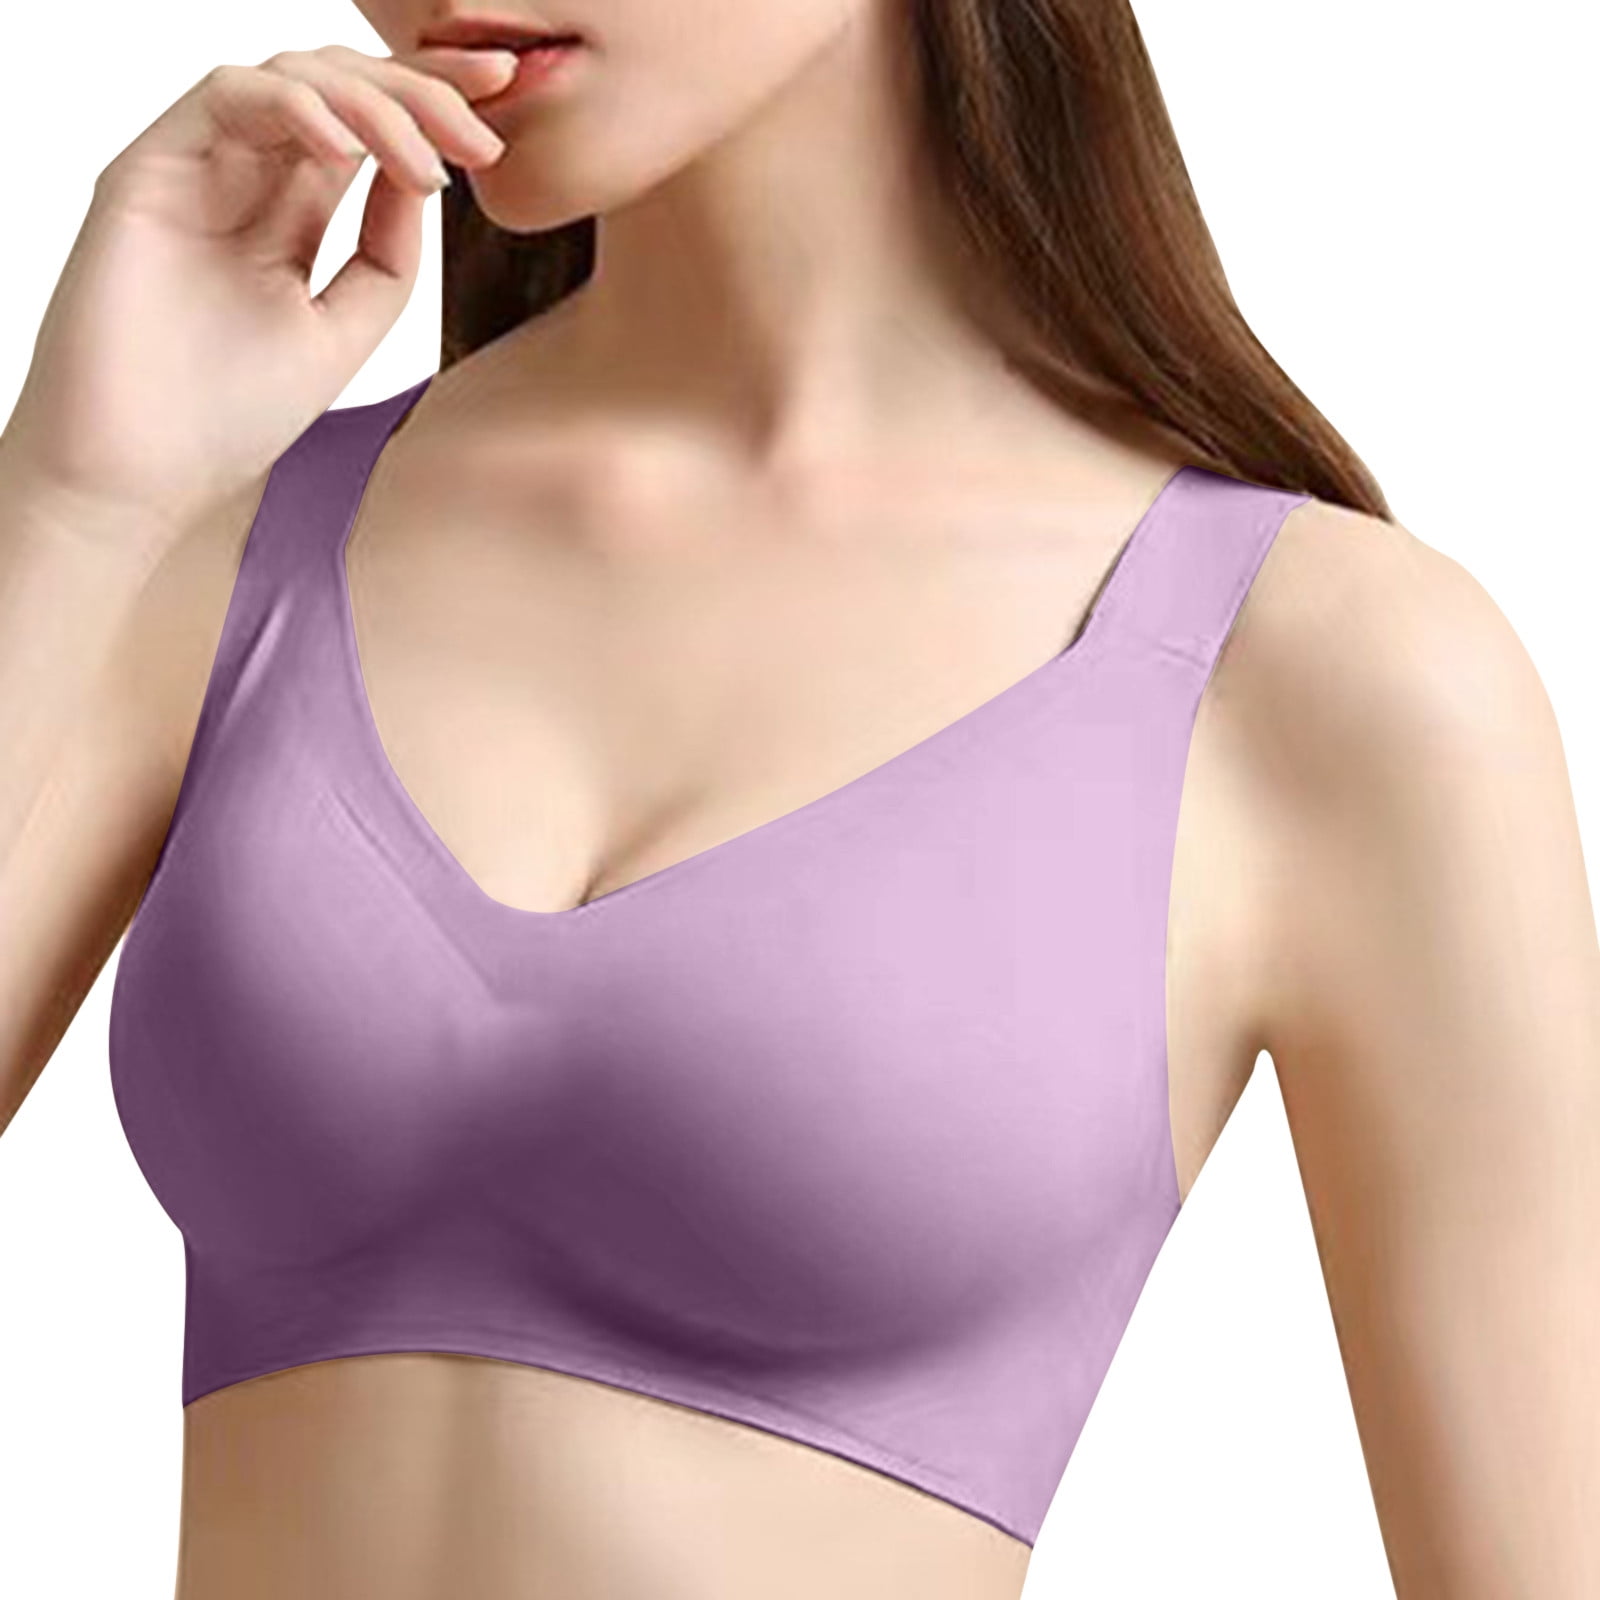 CAICJ98 Lingerie for Women Women Breathable Tube Top Bra Underwear